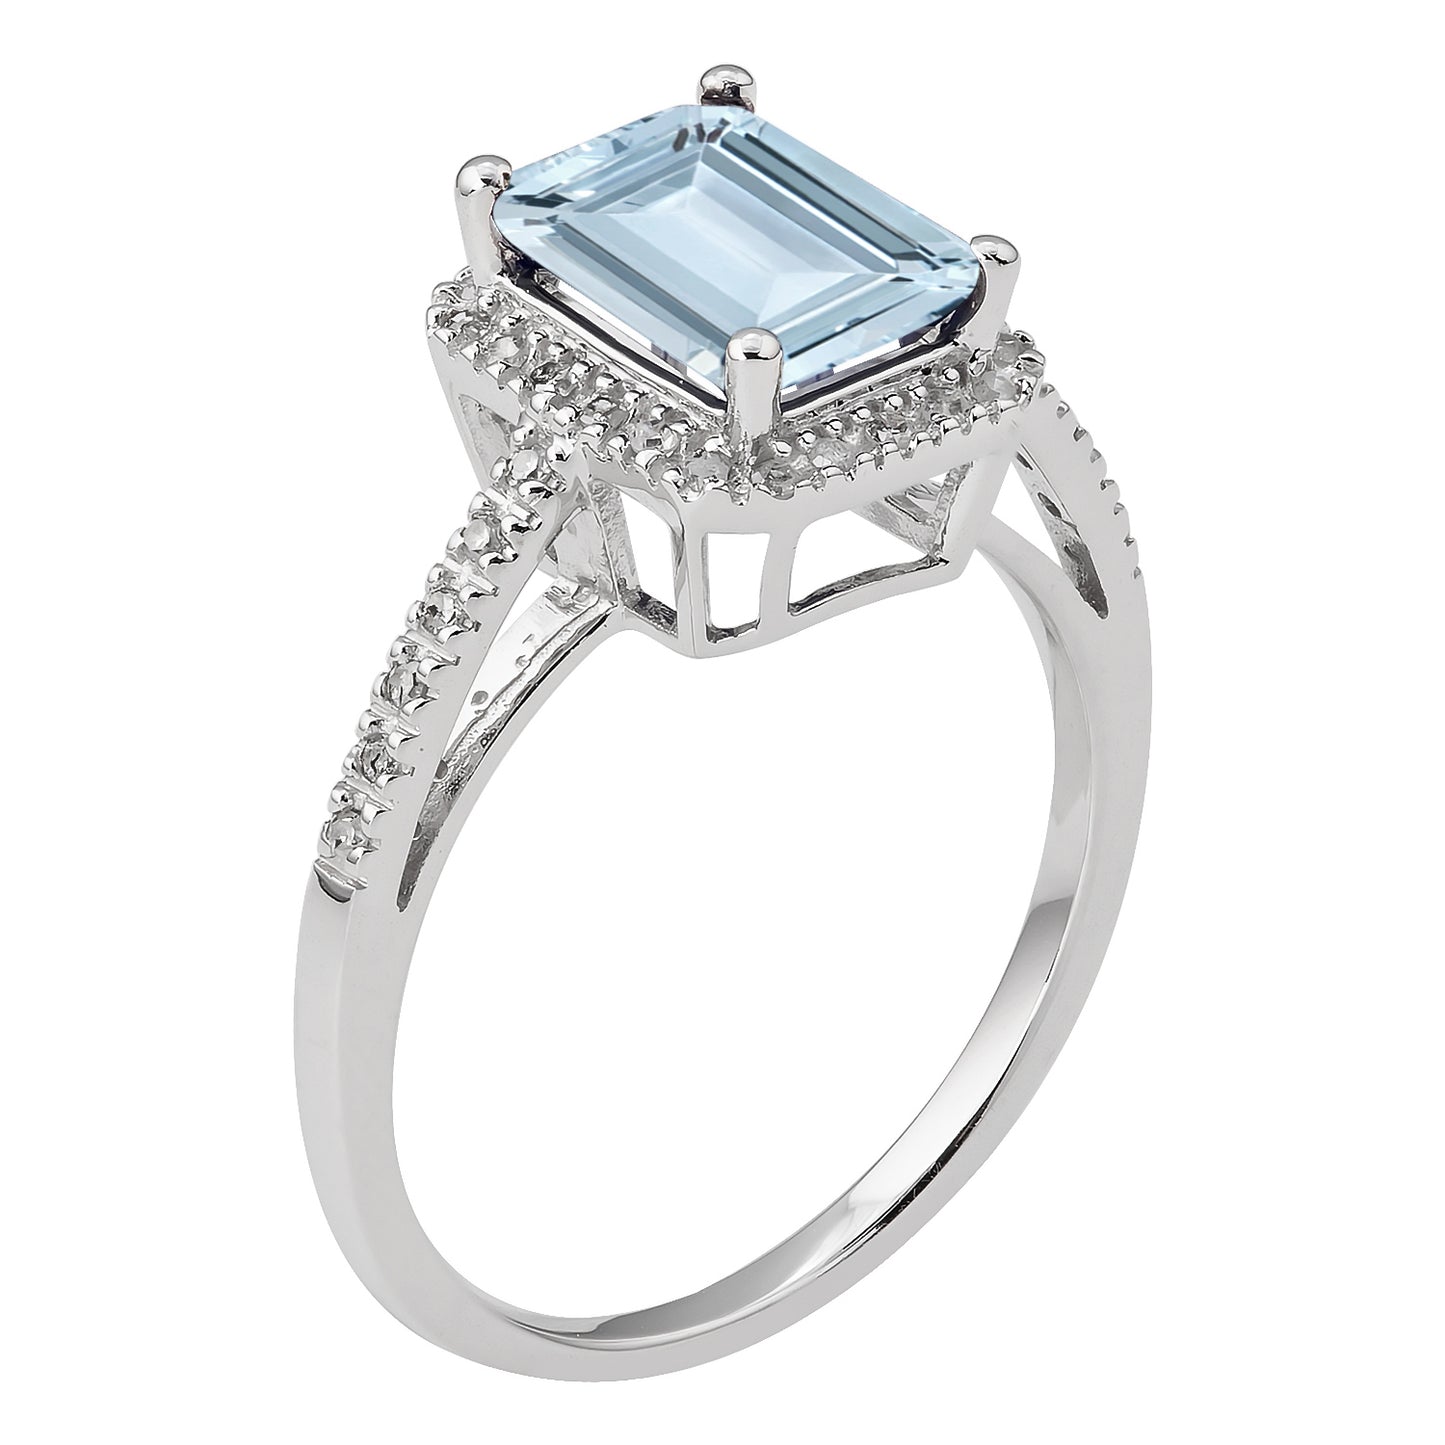 10k White Gold Emerald-Cut Aquamarine and Diamond Halo Ring